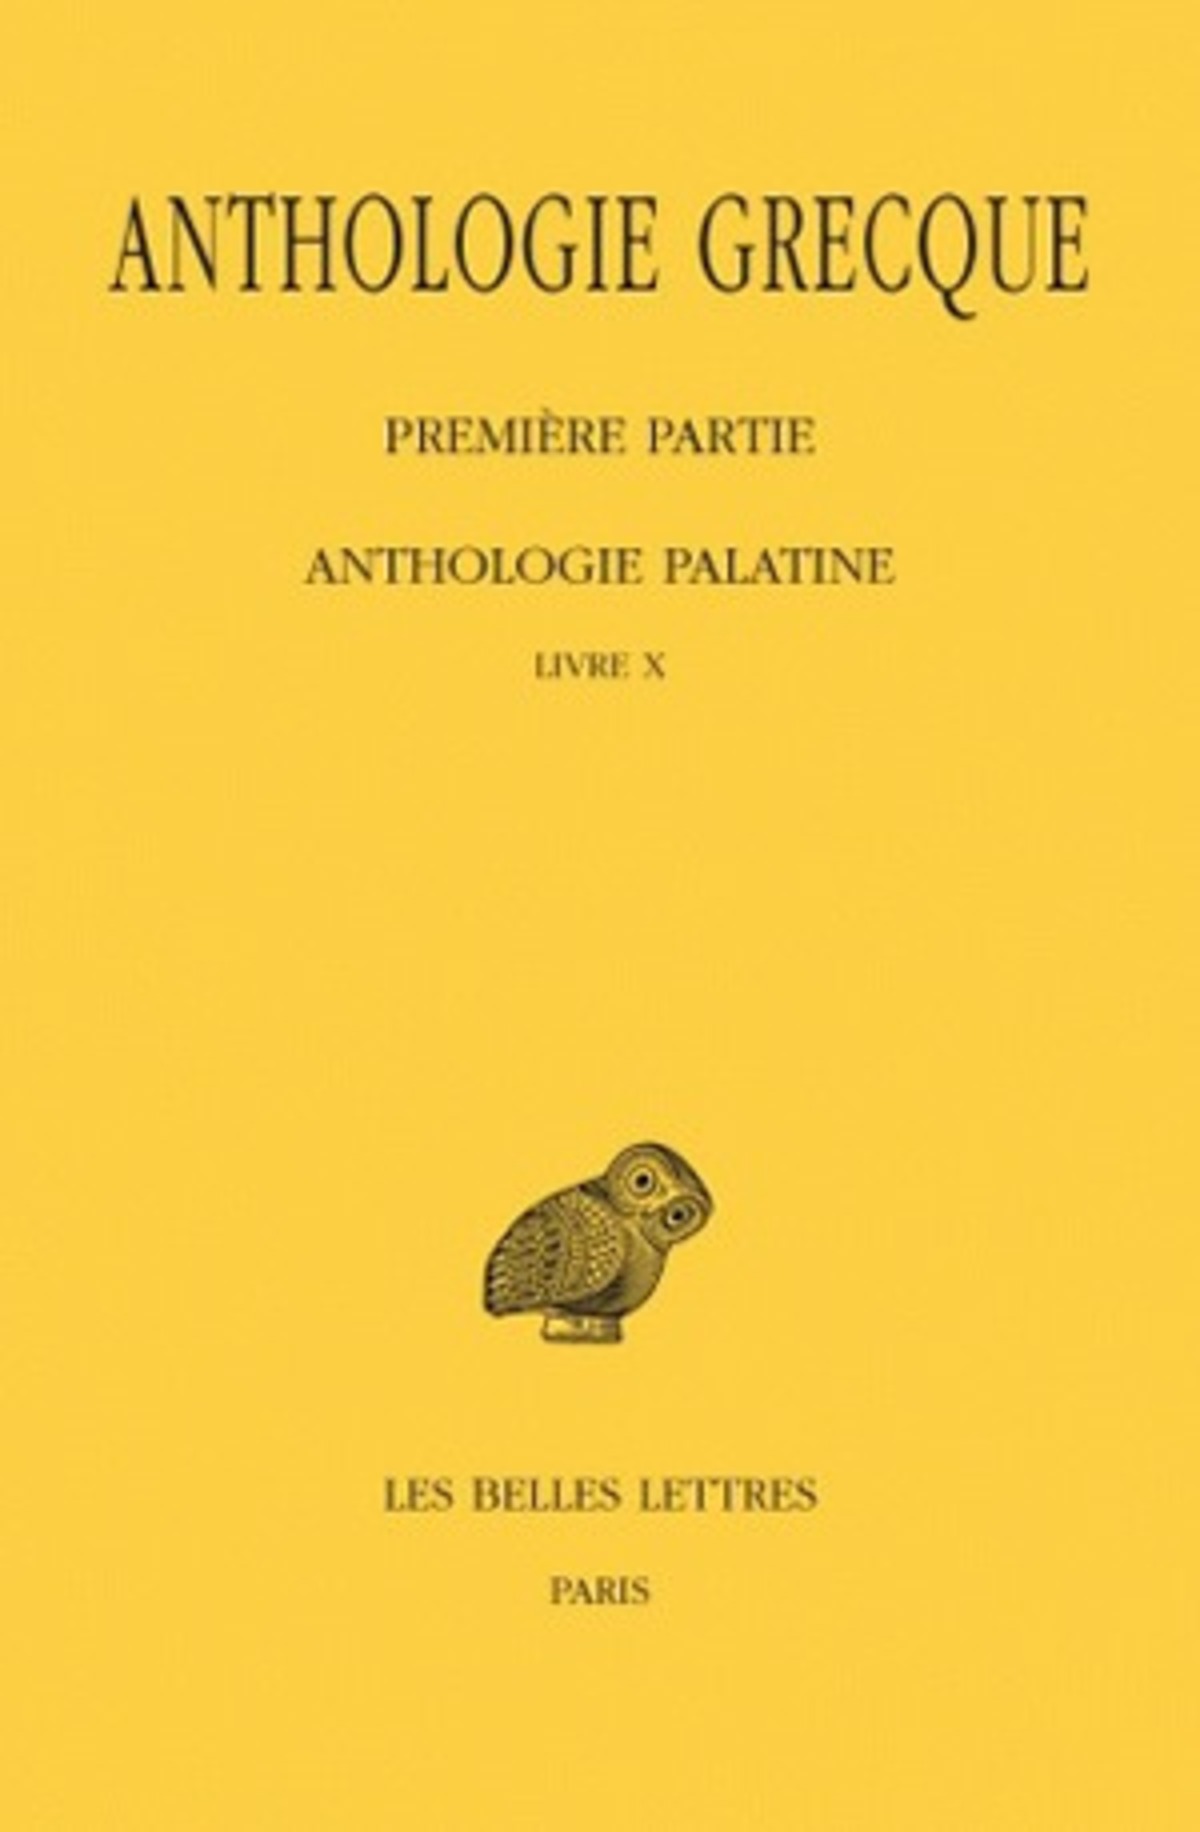 Anthologie grecque. Tome IX: Anthologie palatine, Livre X